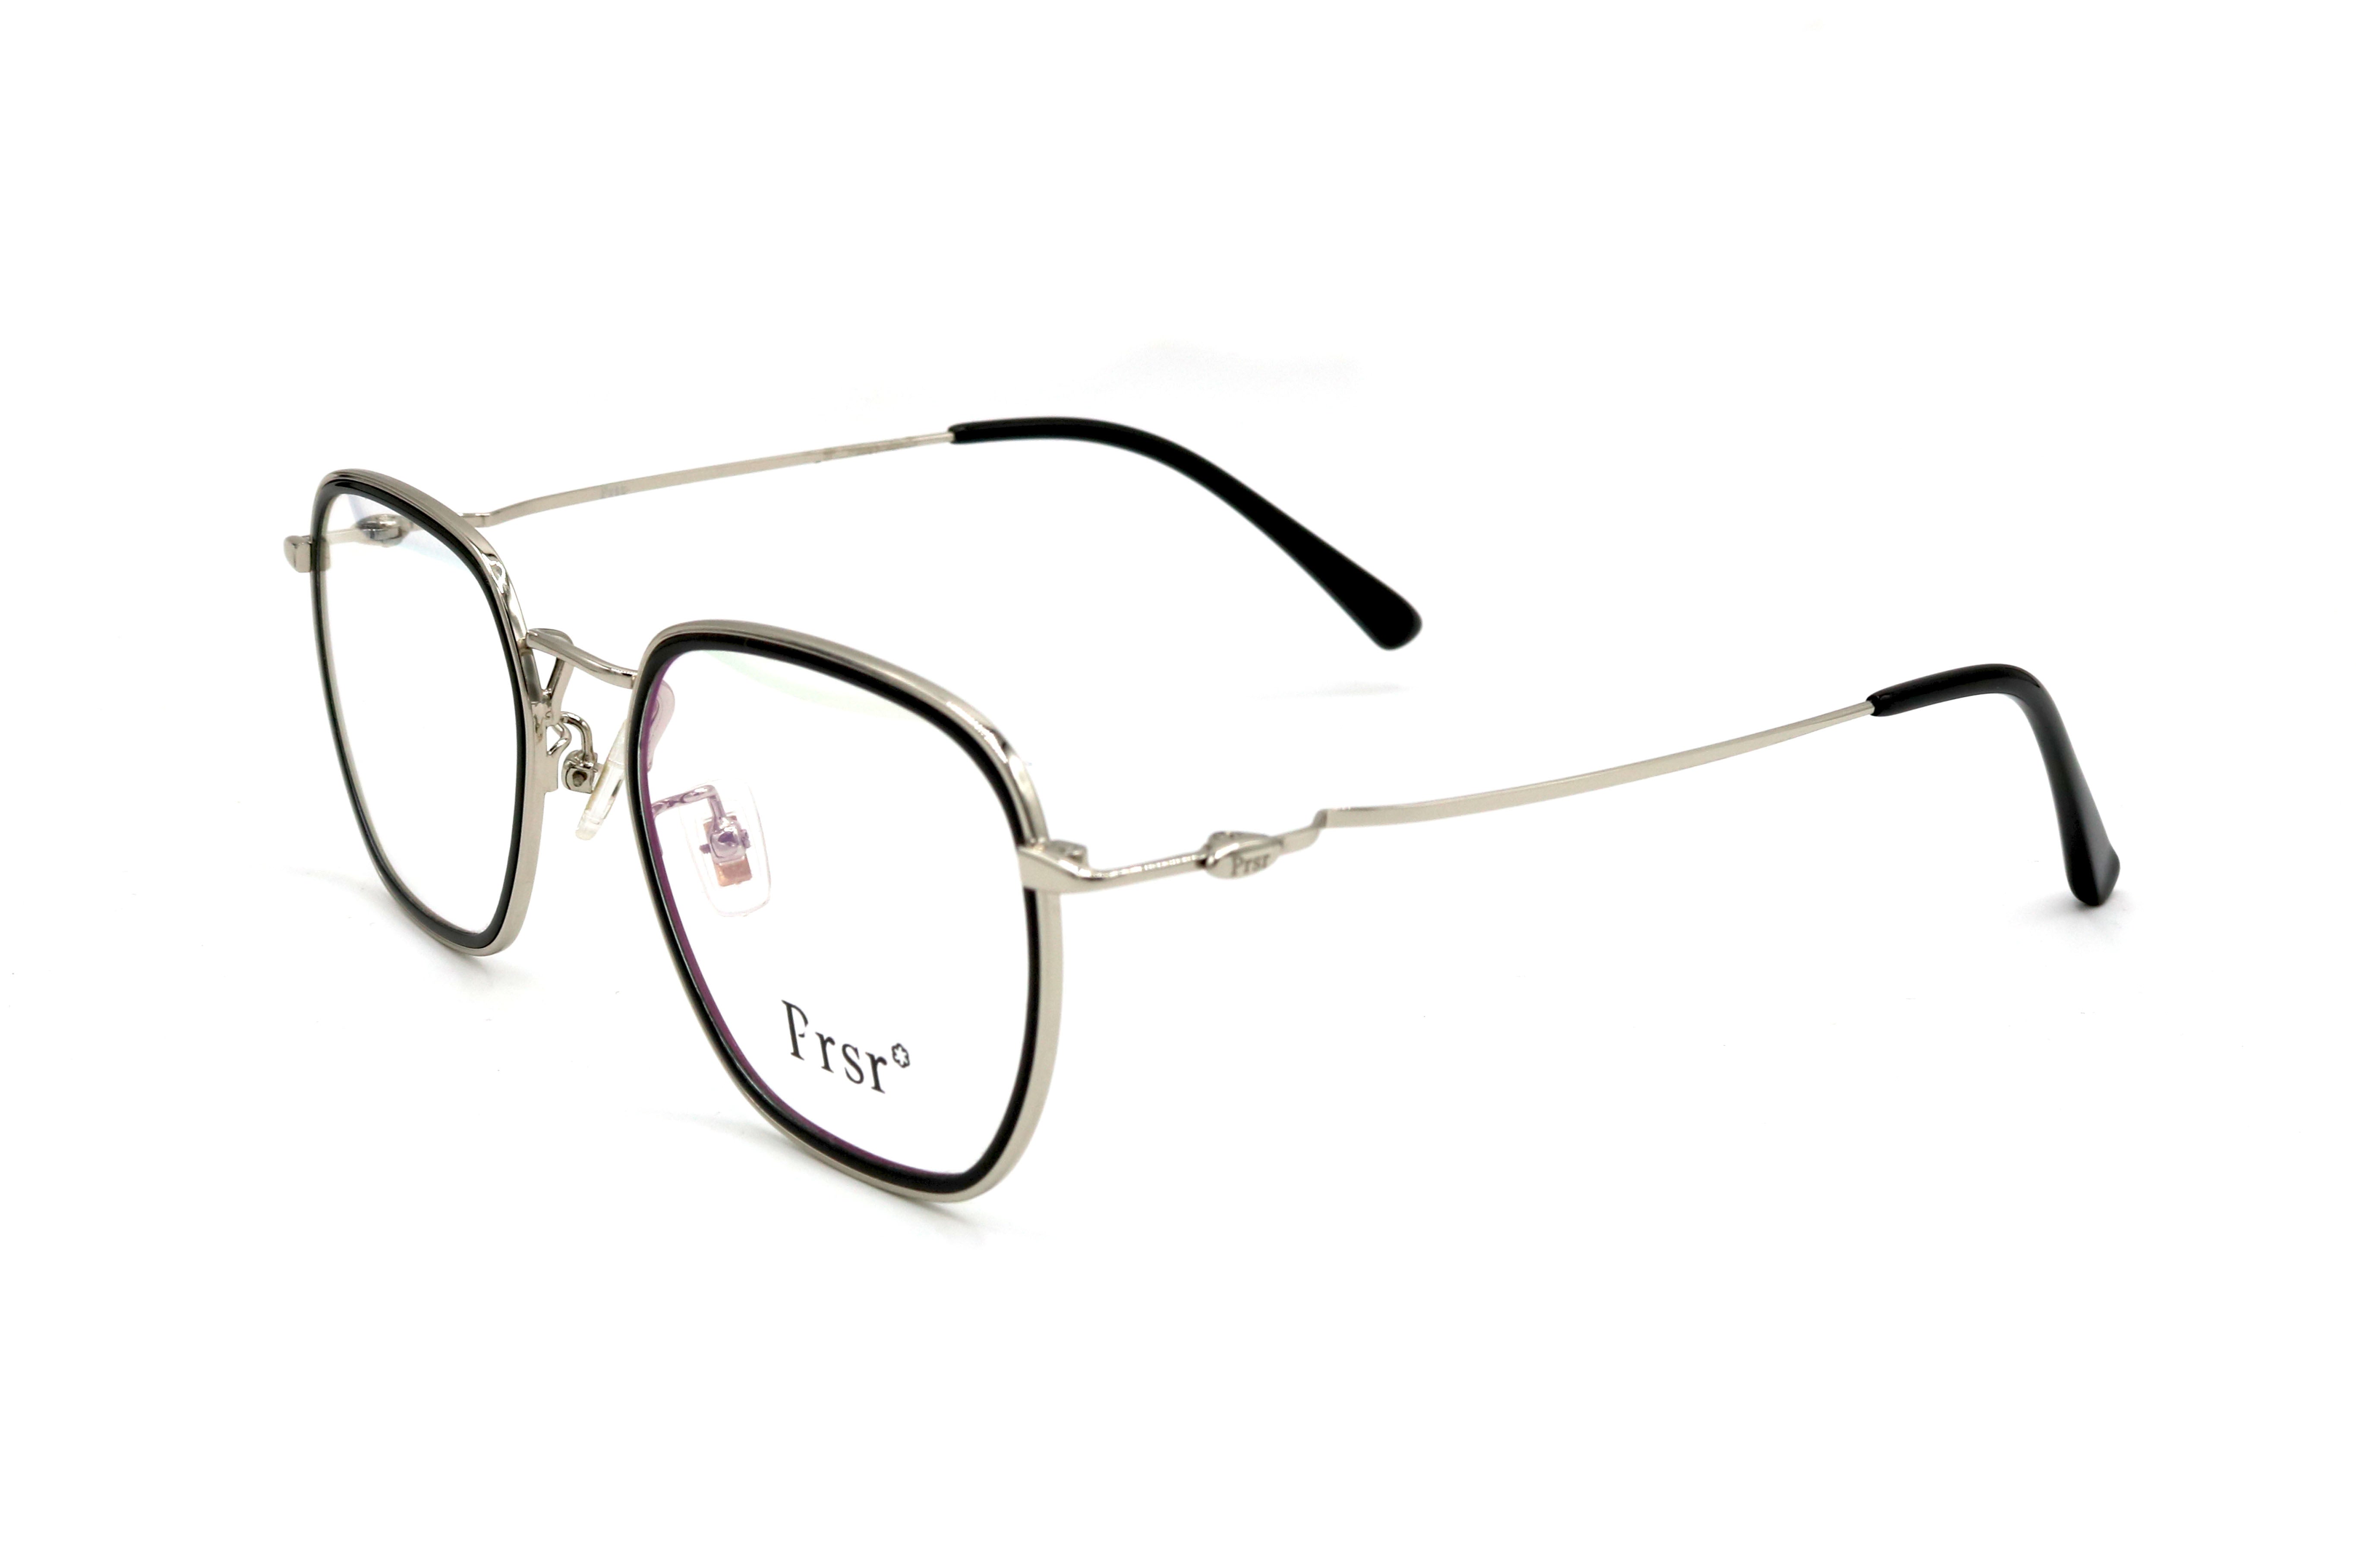 NS Classic - 86292 - Silver - Eyeglasses